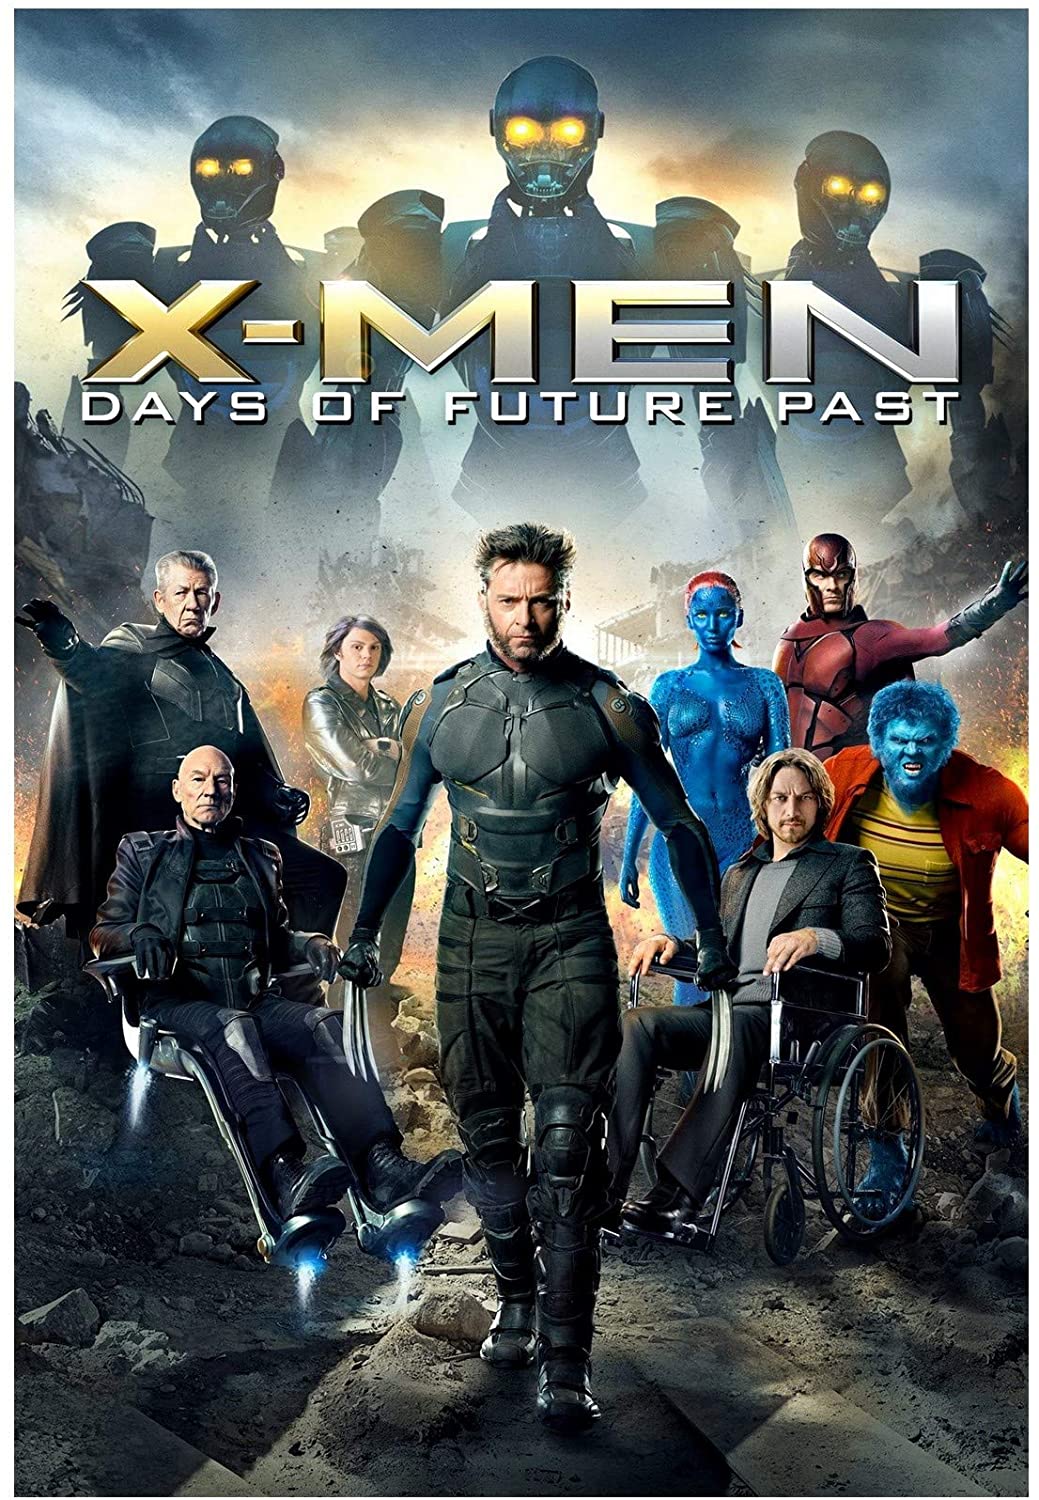 X-Men Days Of Future Past movie poster.